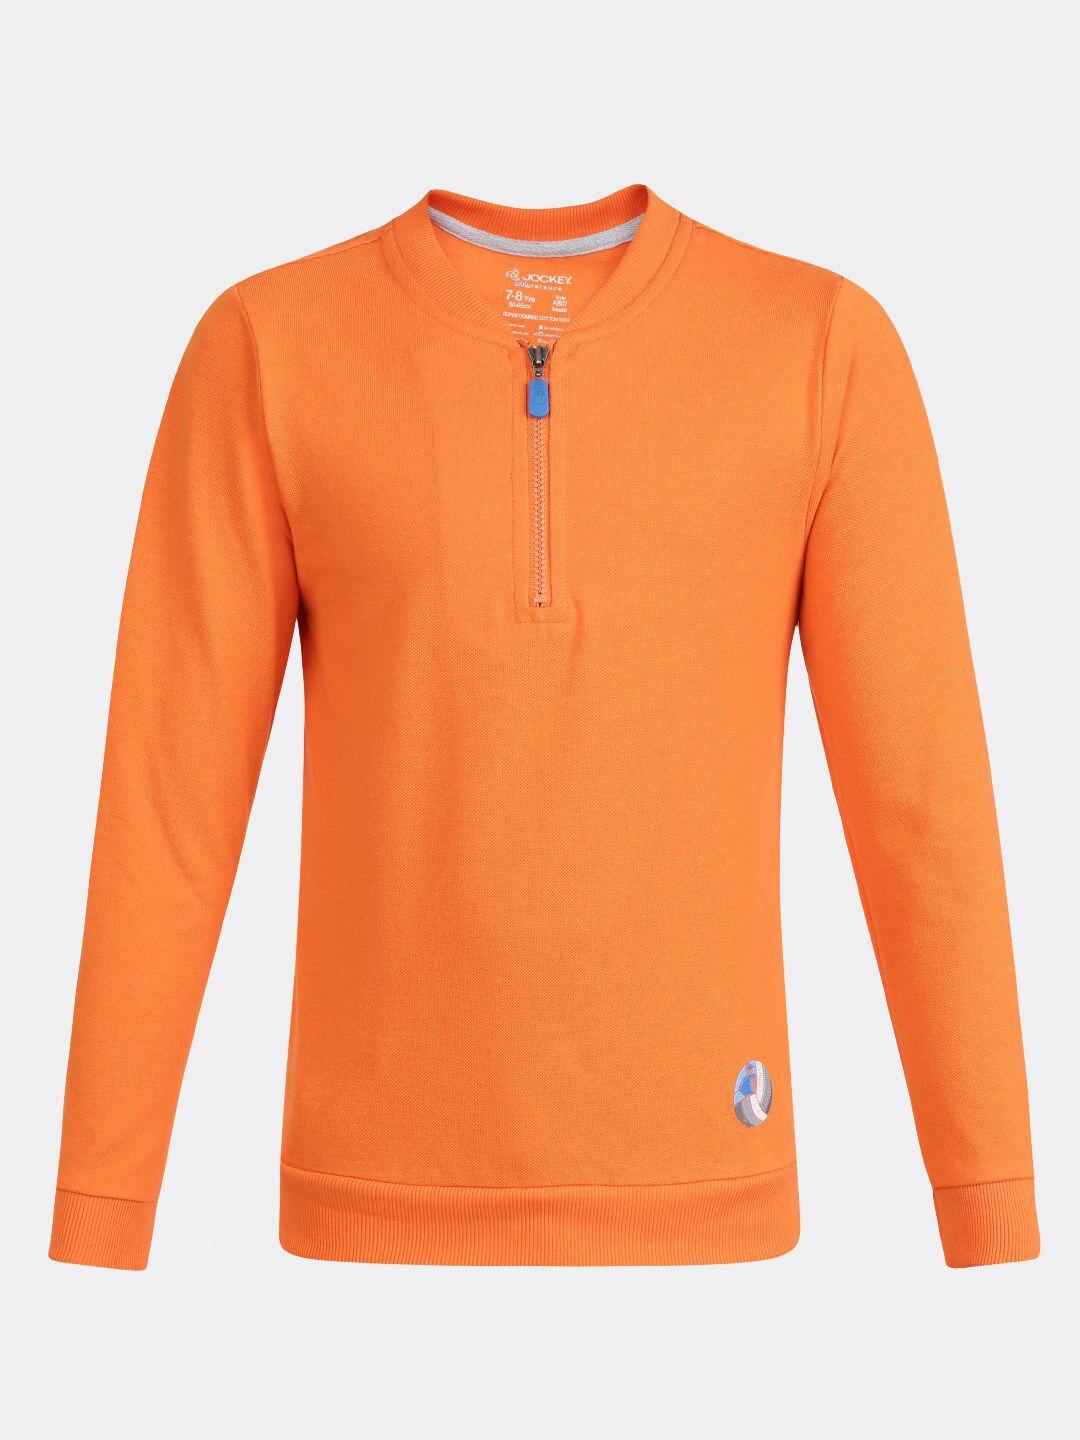 jockey boys orange sweatshirt